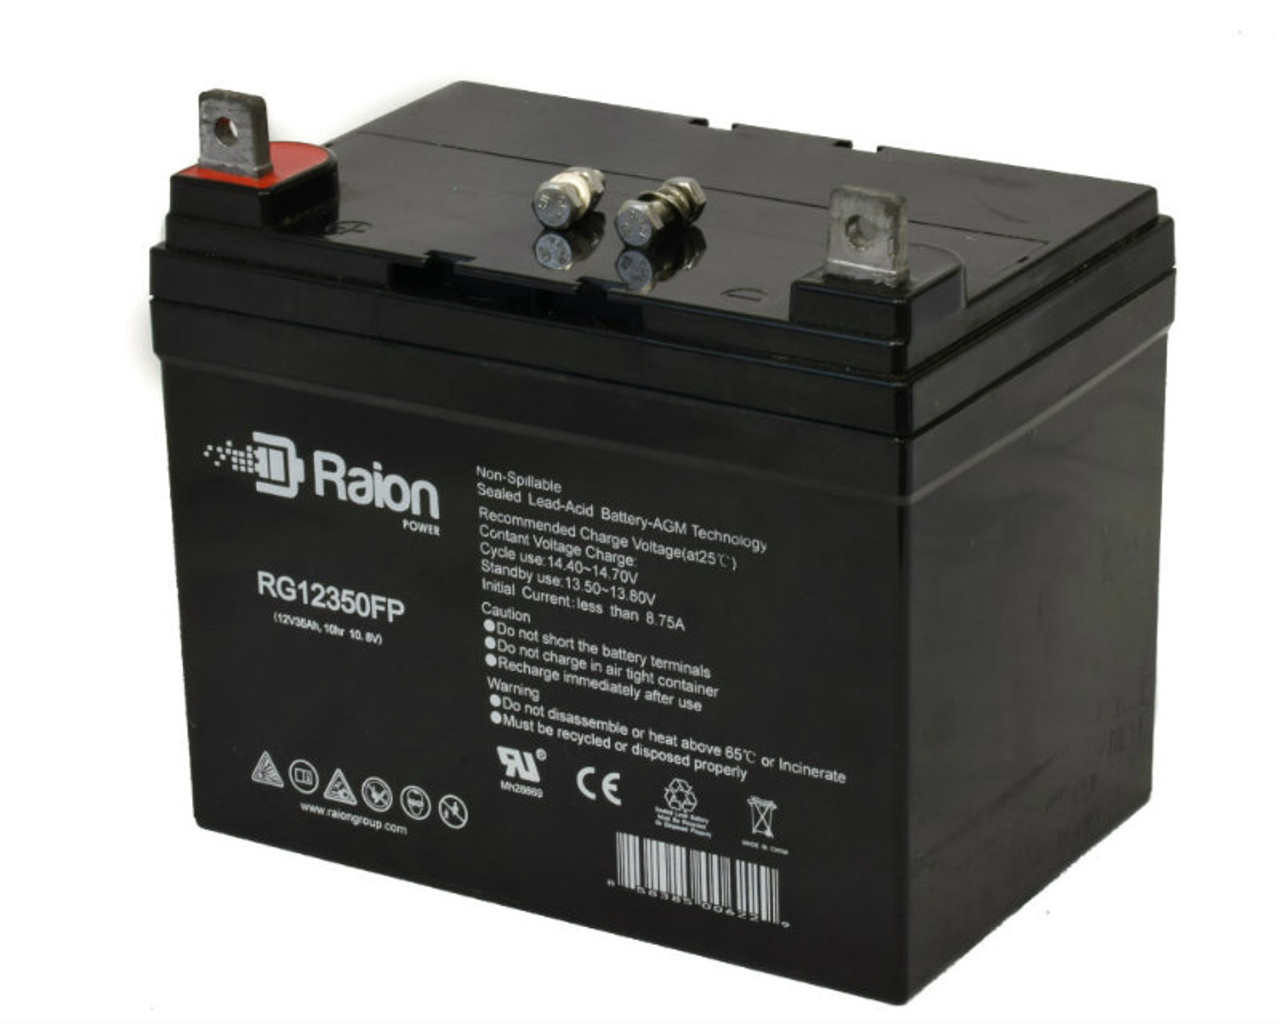 Raion Power Replacement 12V 35Ah Battery for Best Battery SLA12350 - 1 Pack